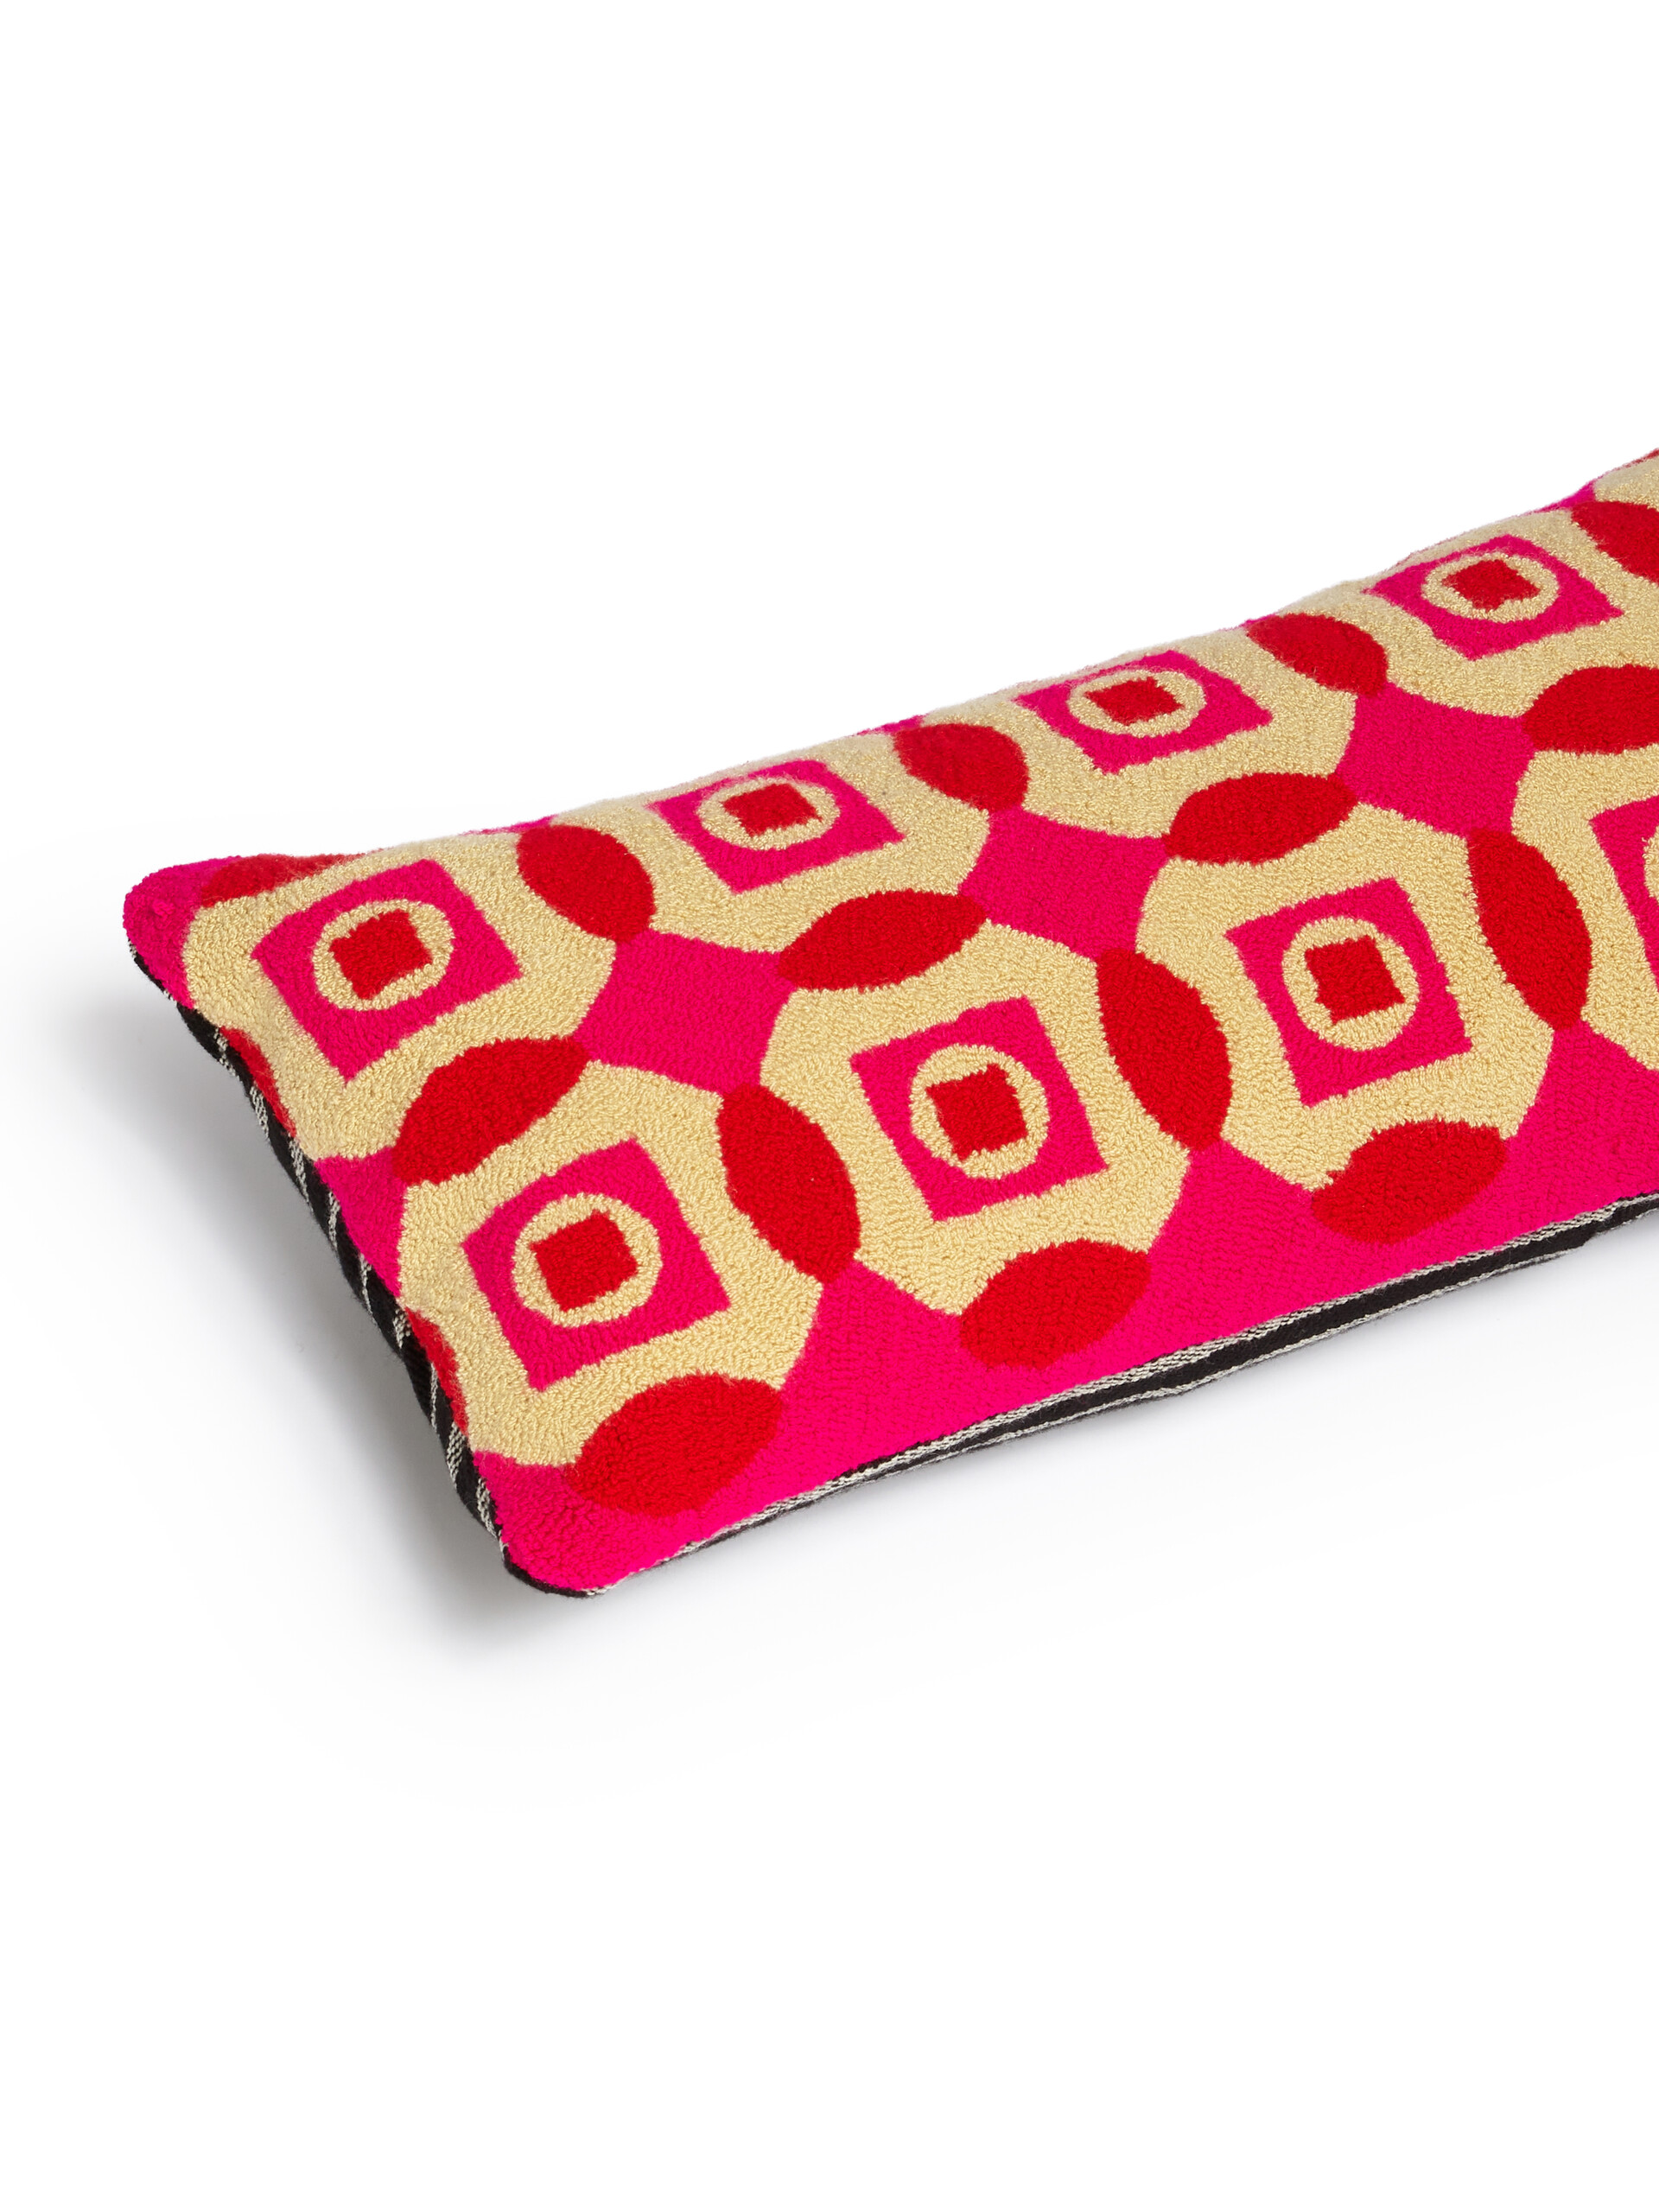 MARNI MARKET cushion in multicolor pink fabric - Furniture - Image 3